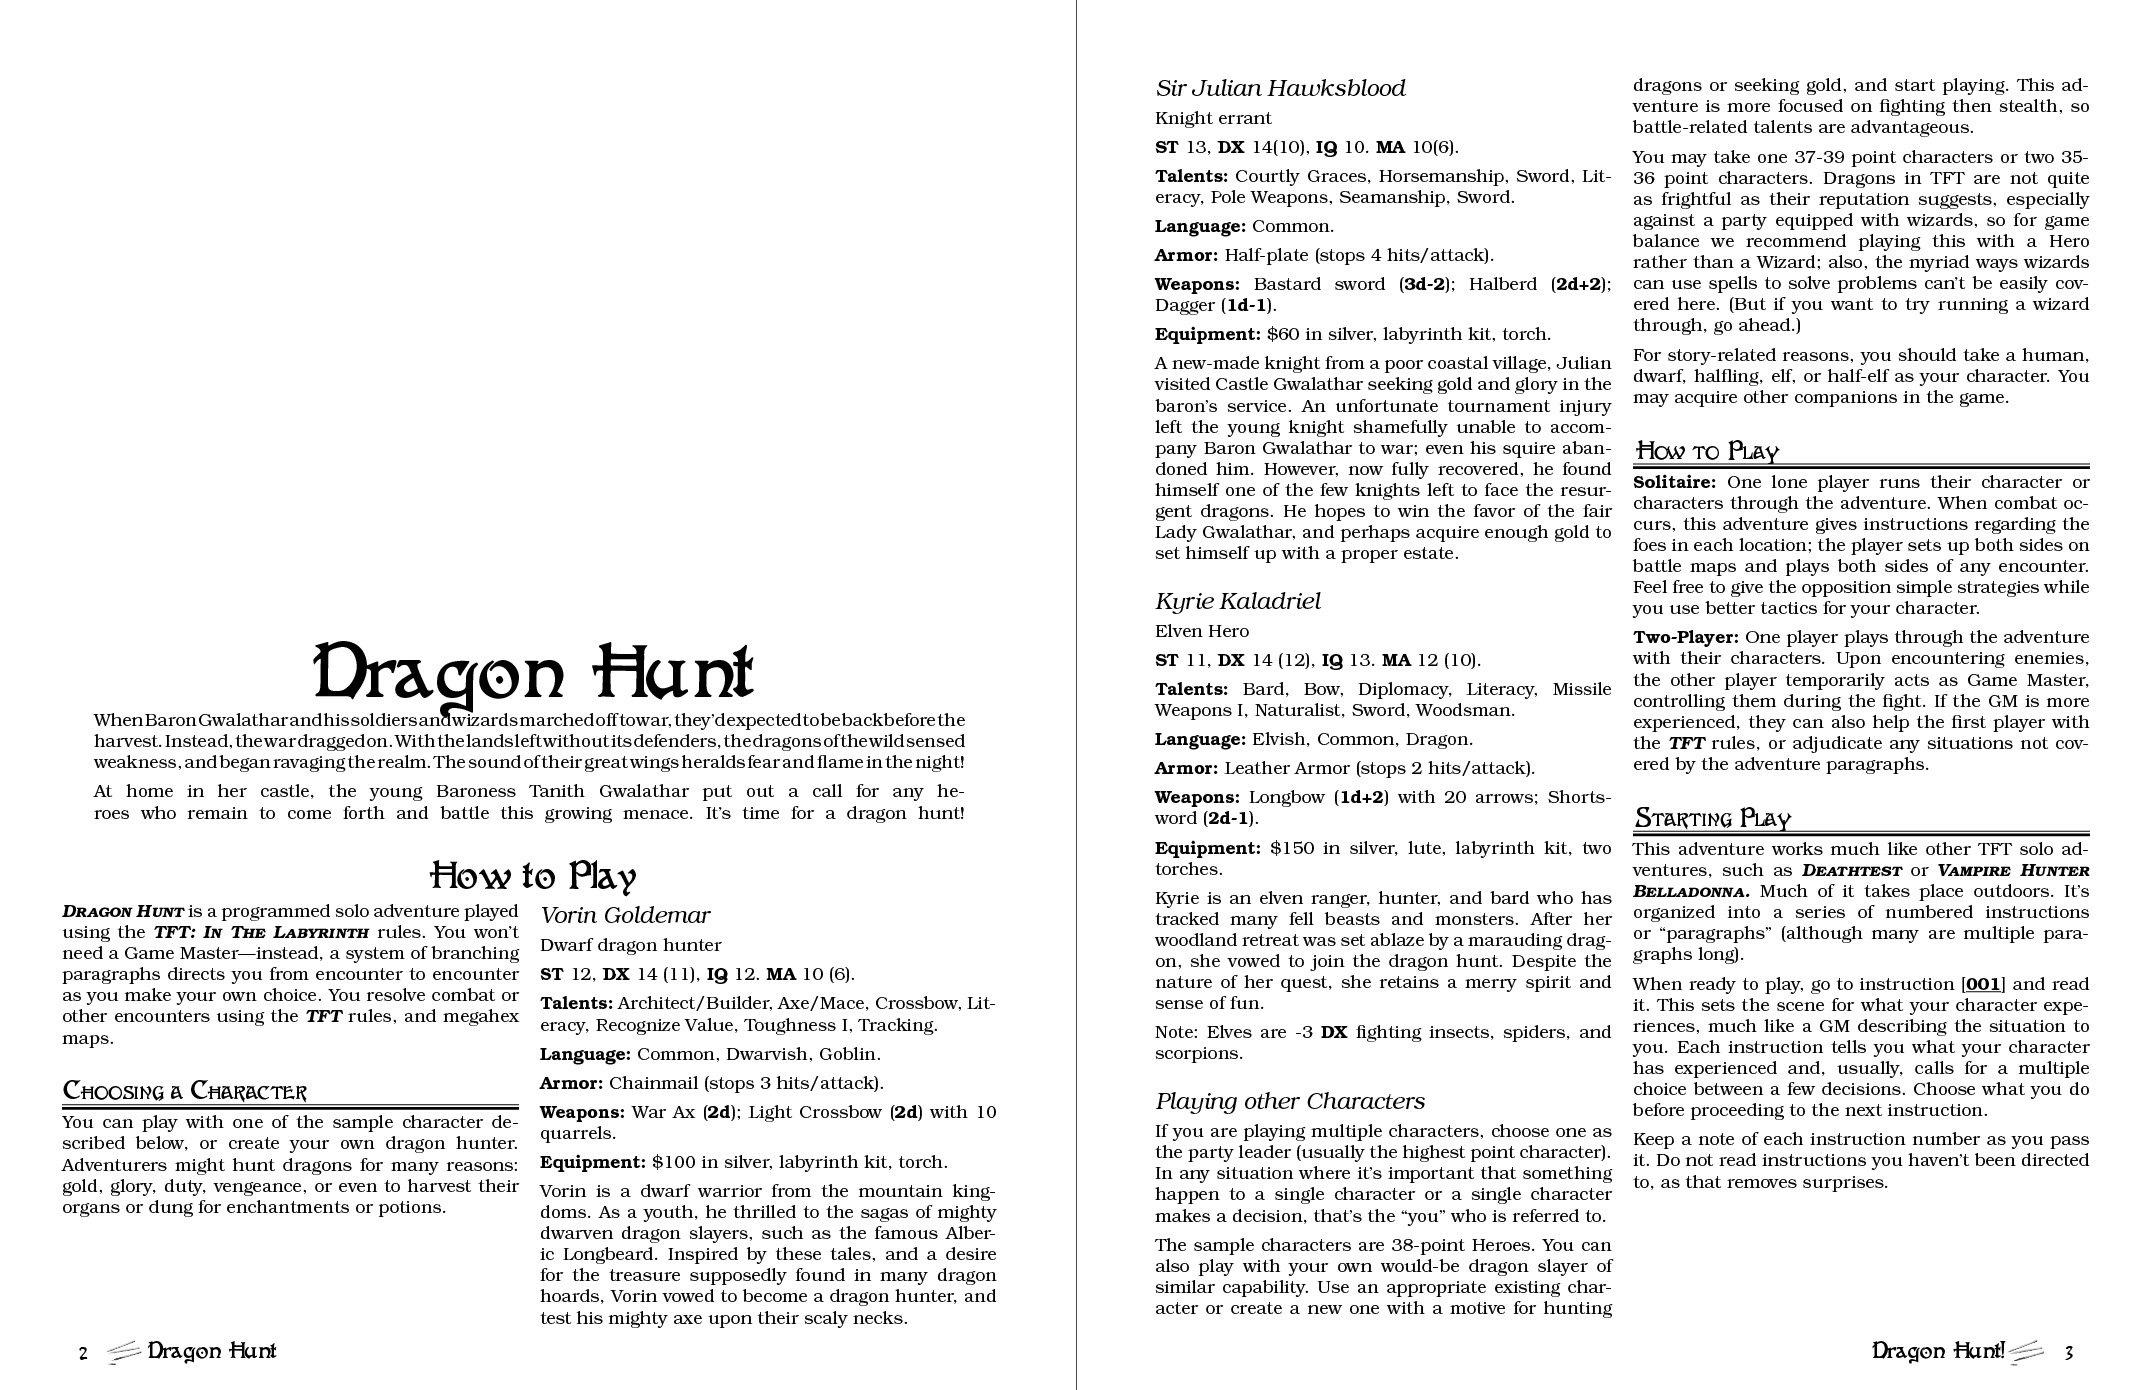 Dragon Hunt Sample Spread.jpg